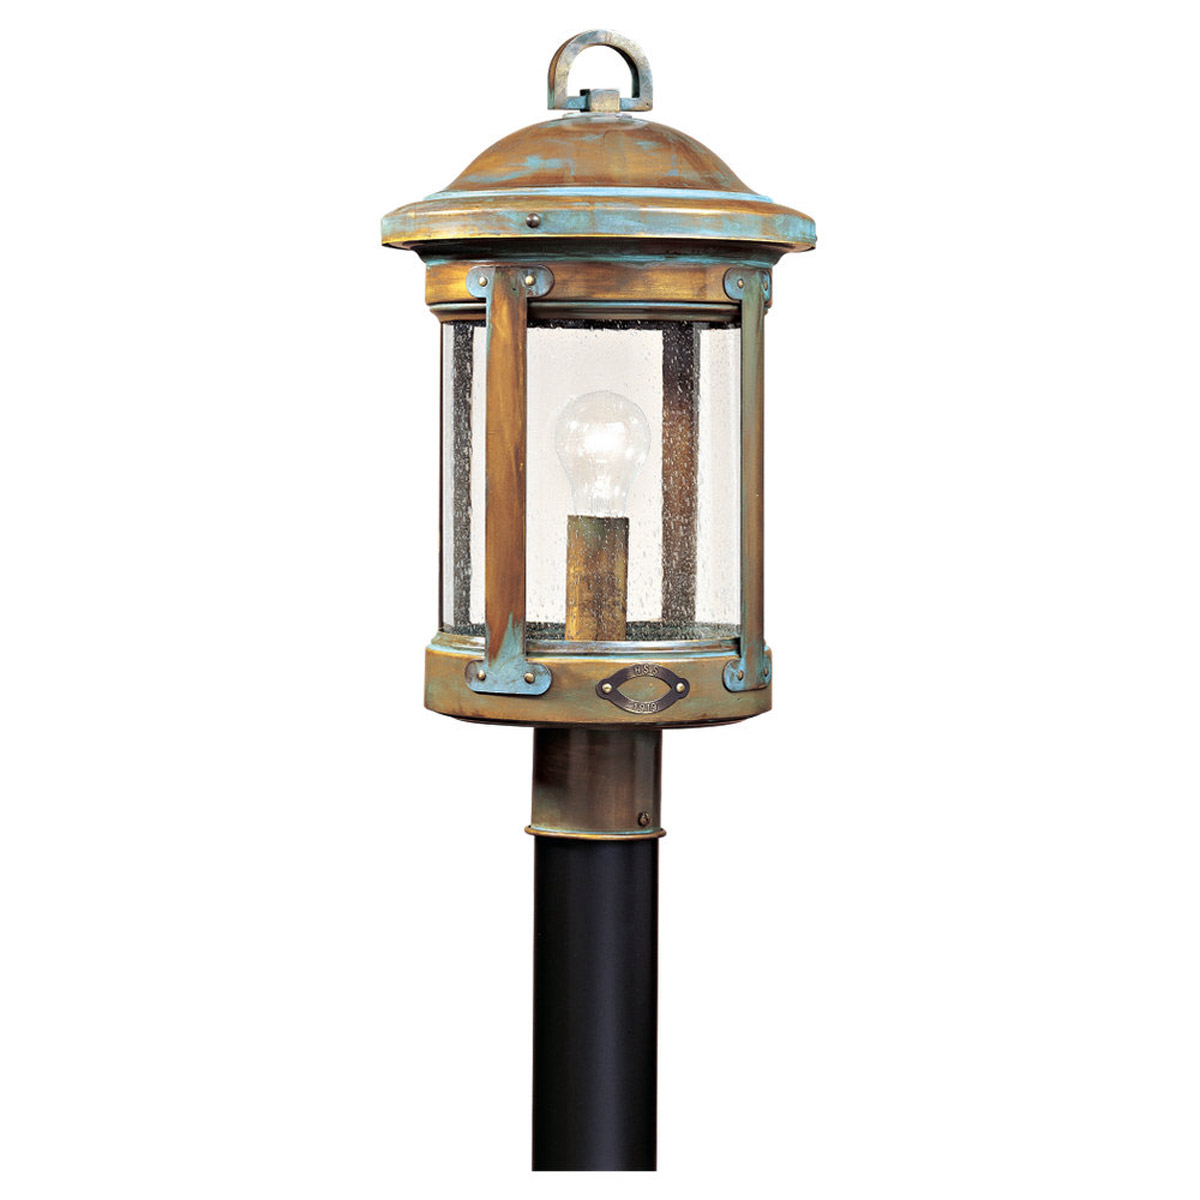 Sea Gull Lighting HSS CO-OP 1 Light Outdoor Post Lantern in Aged Brass 8241-28